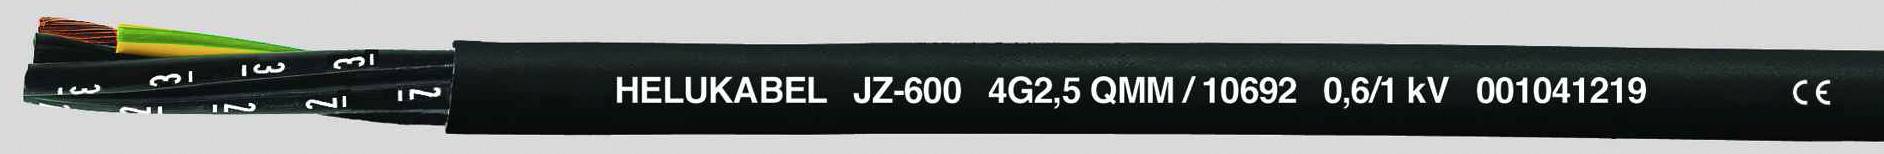 HELUKABEL JZ-600 Steuerleitung 14 G 0.75 mm² Schwarz 10599-500 500 m